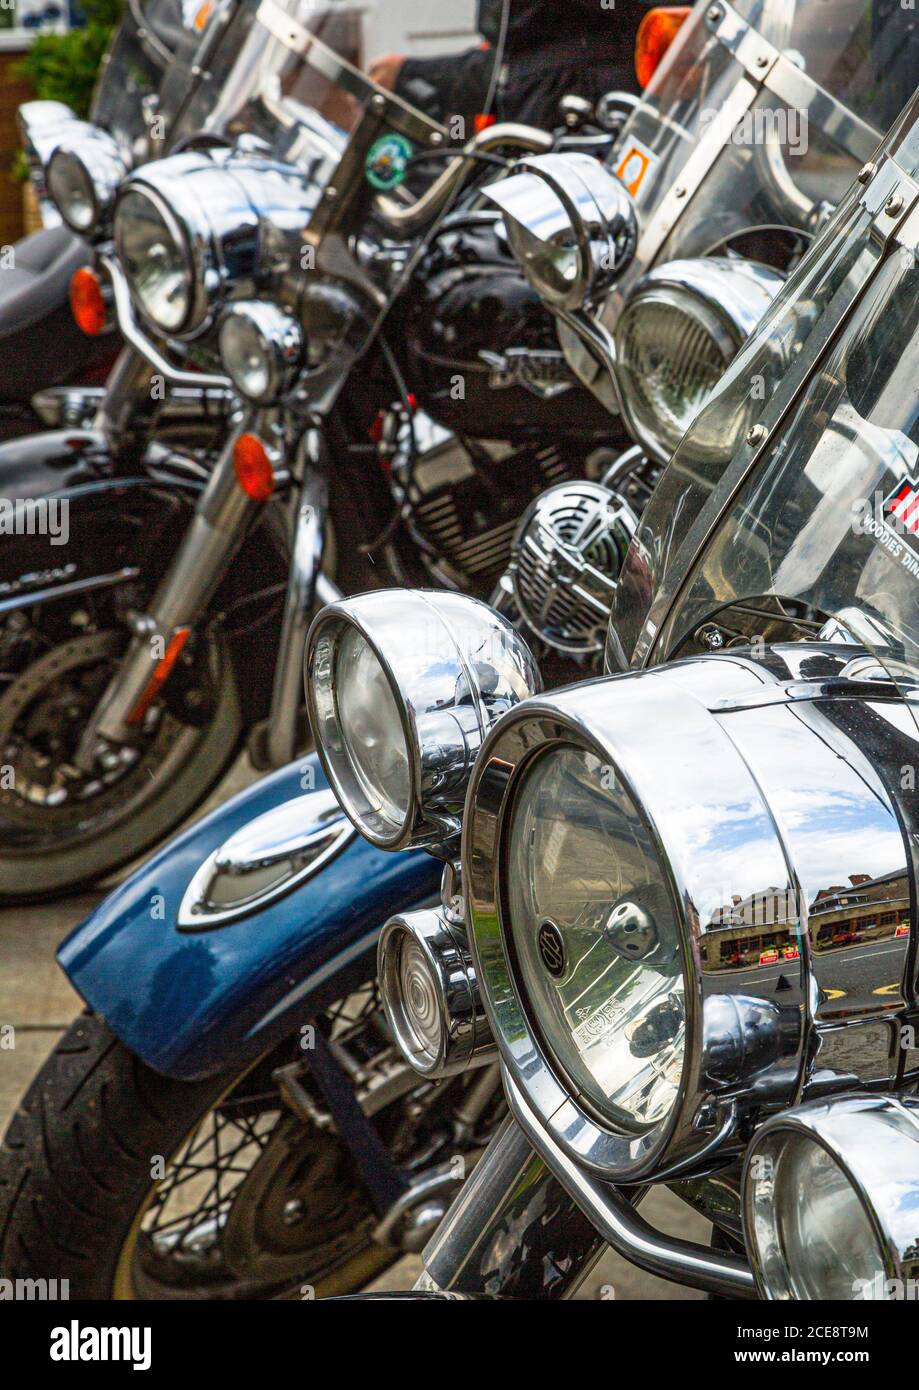 Harley-Davidson motorcyles parked en masse. Stock Photo